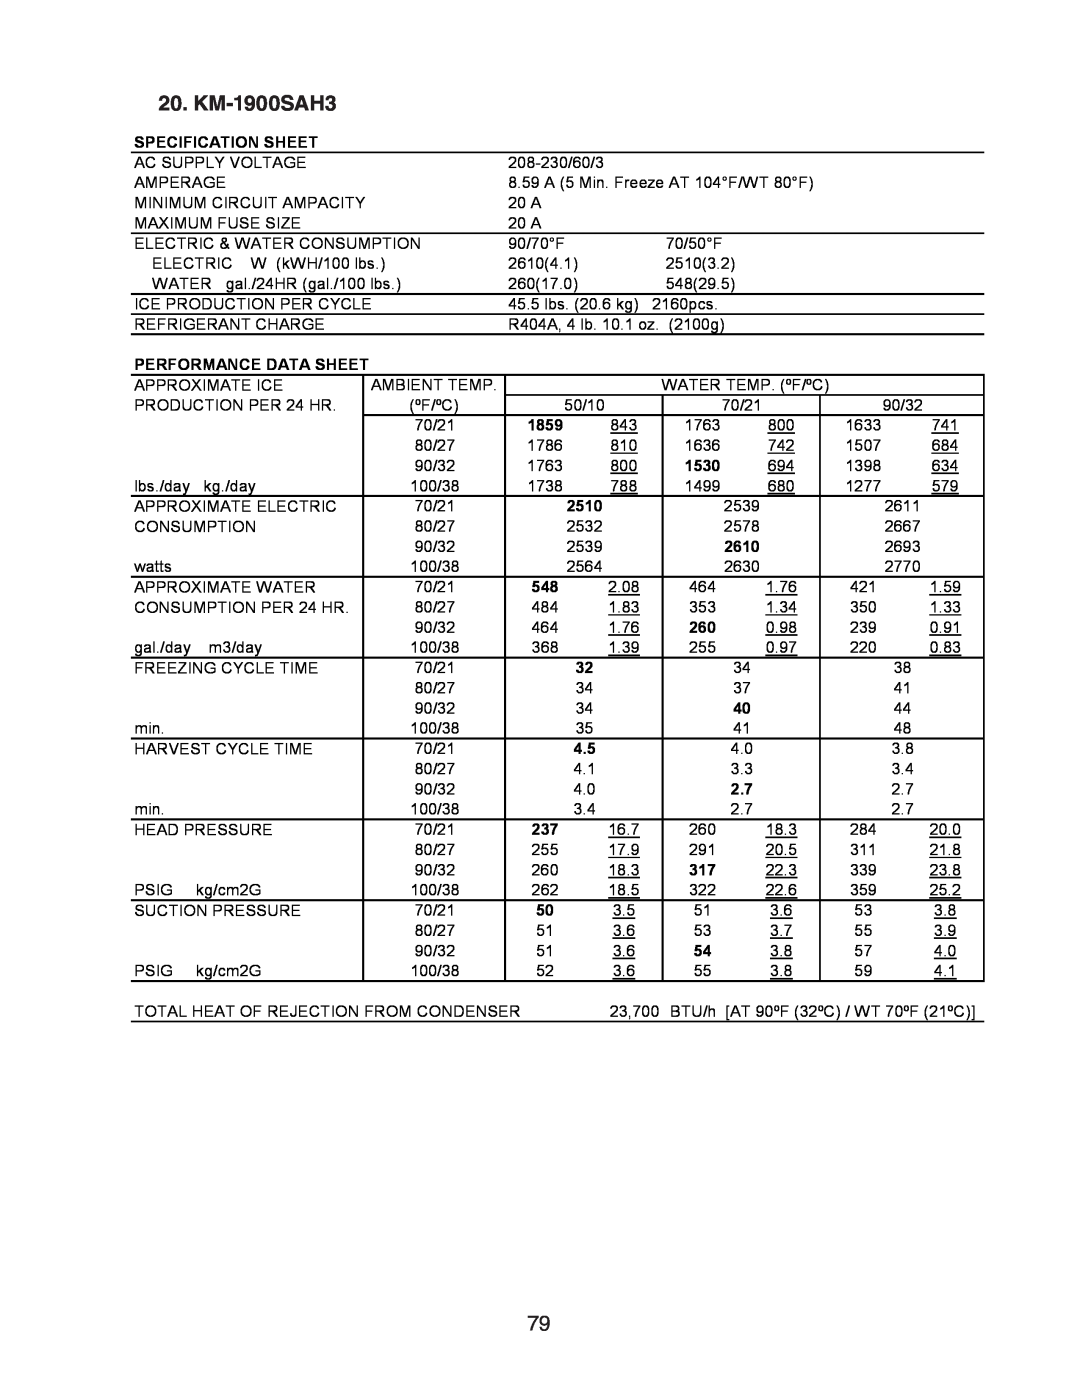 Hoshizaki SRH3 KM-2500SWH3, SRH/3 KM-2100SWH3 KM-1900SAH3, Specification Sheet, Performance Data Sheet, 1859, 1530 